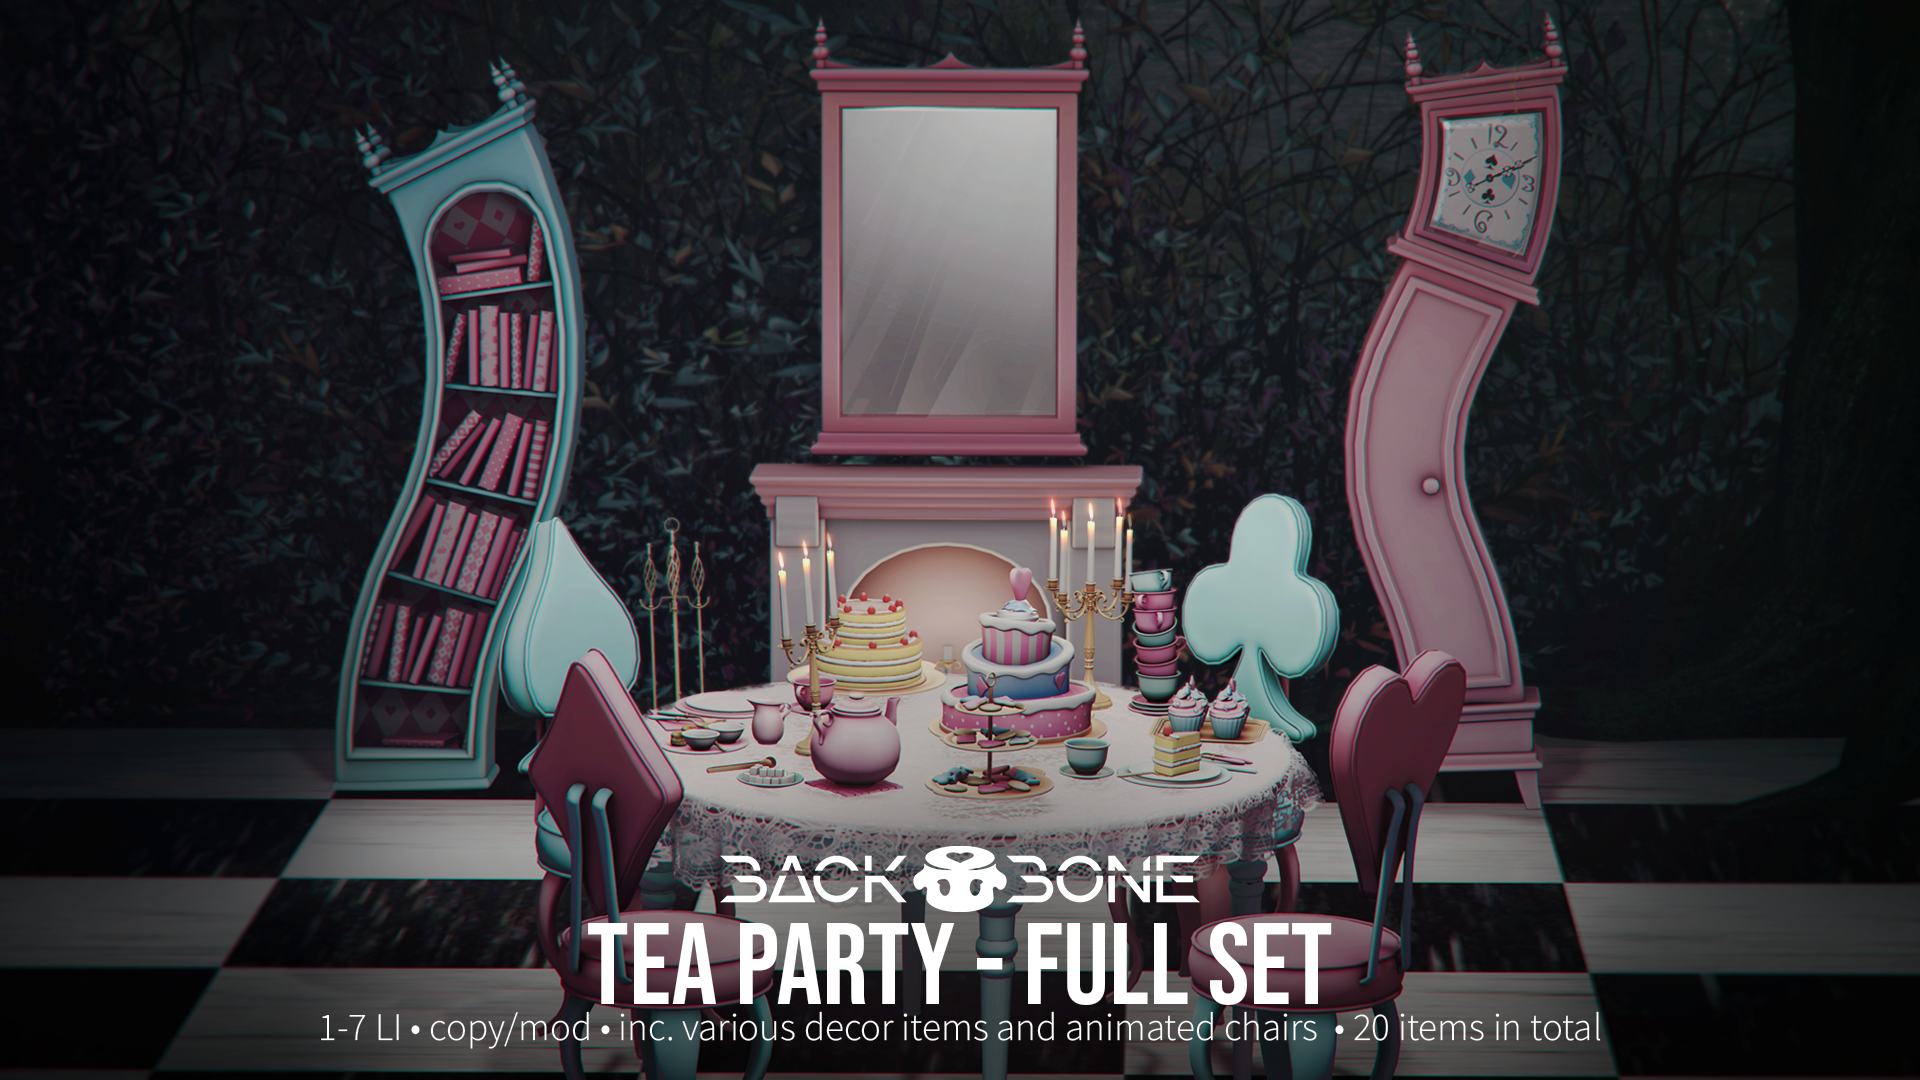 BackBone – Tea Party Full Set